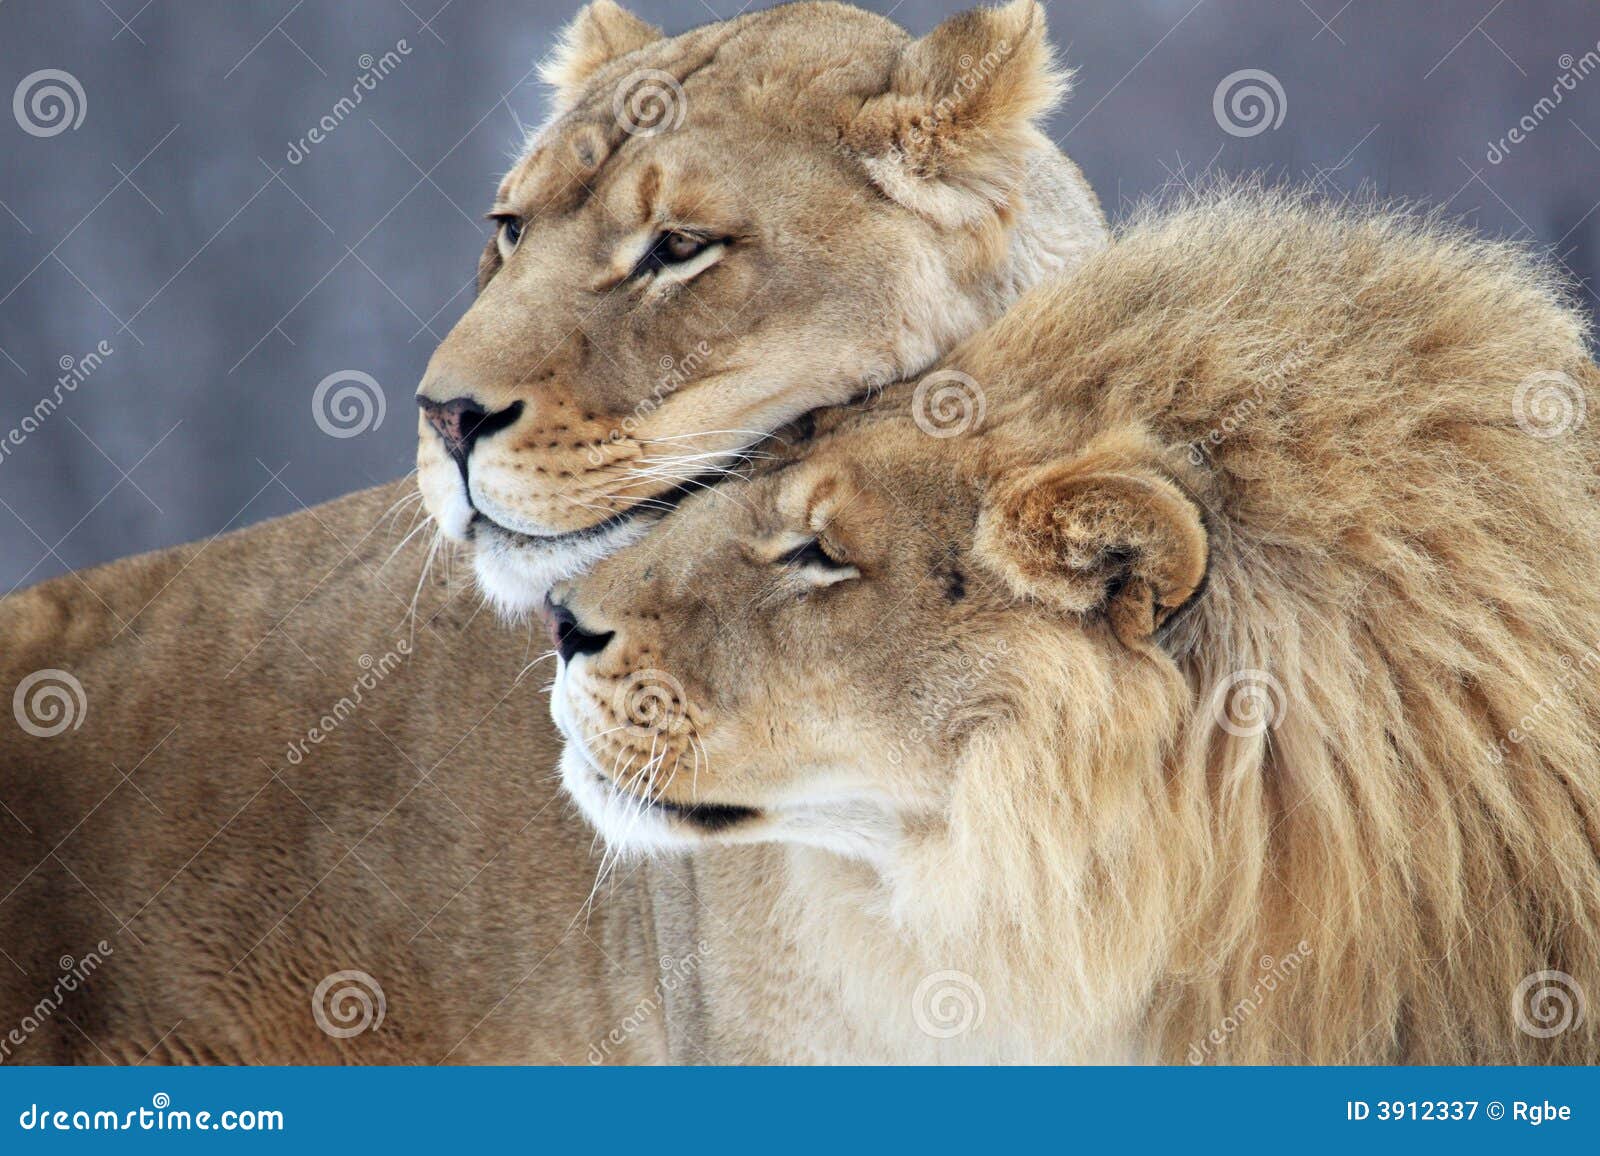 lion lover